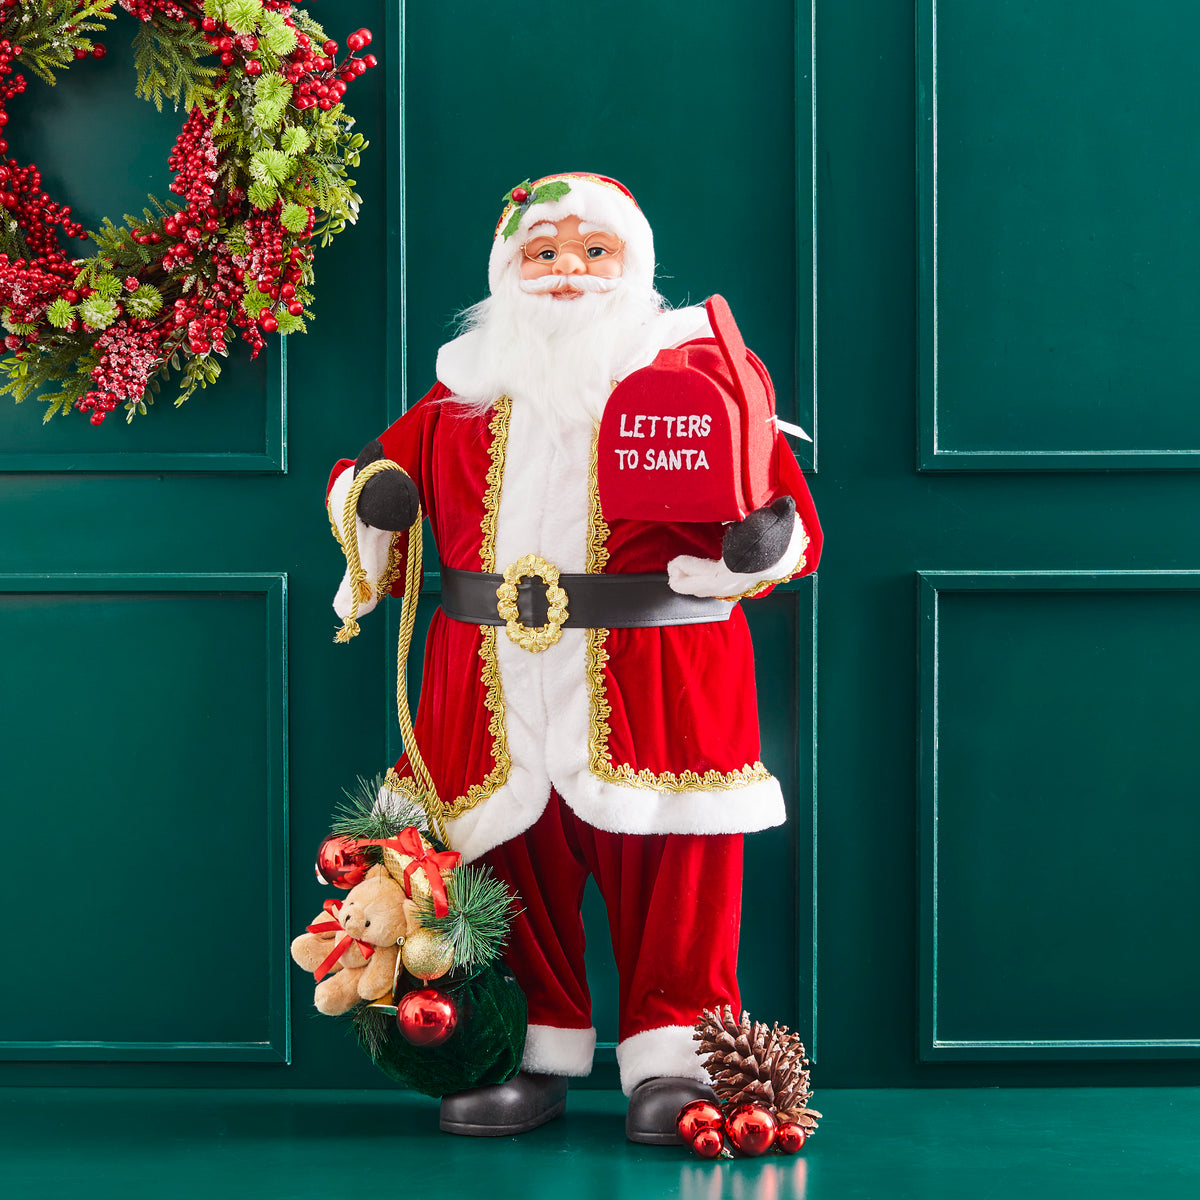 Presente do ONLYOFFICE: parte 4, encontre o Papai Noel